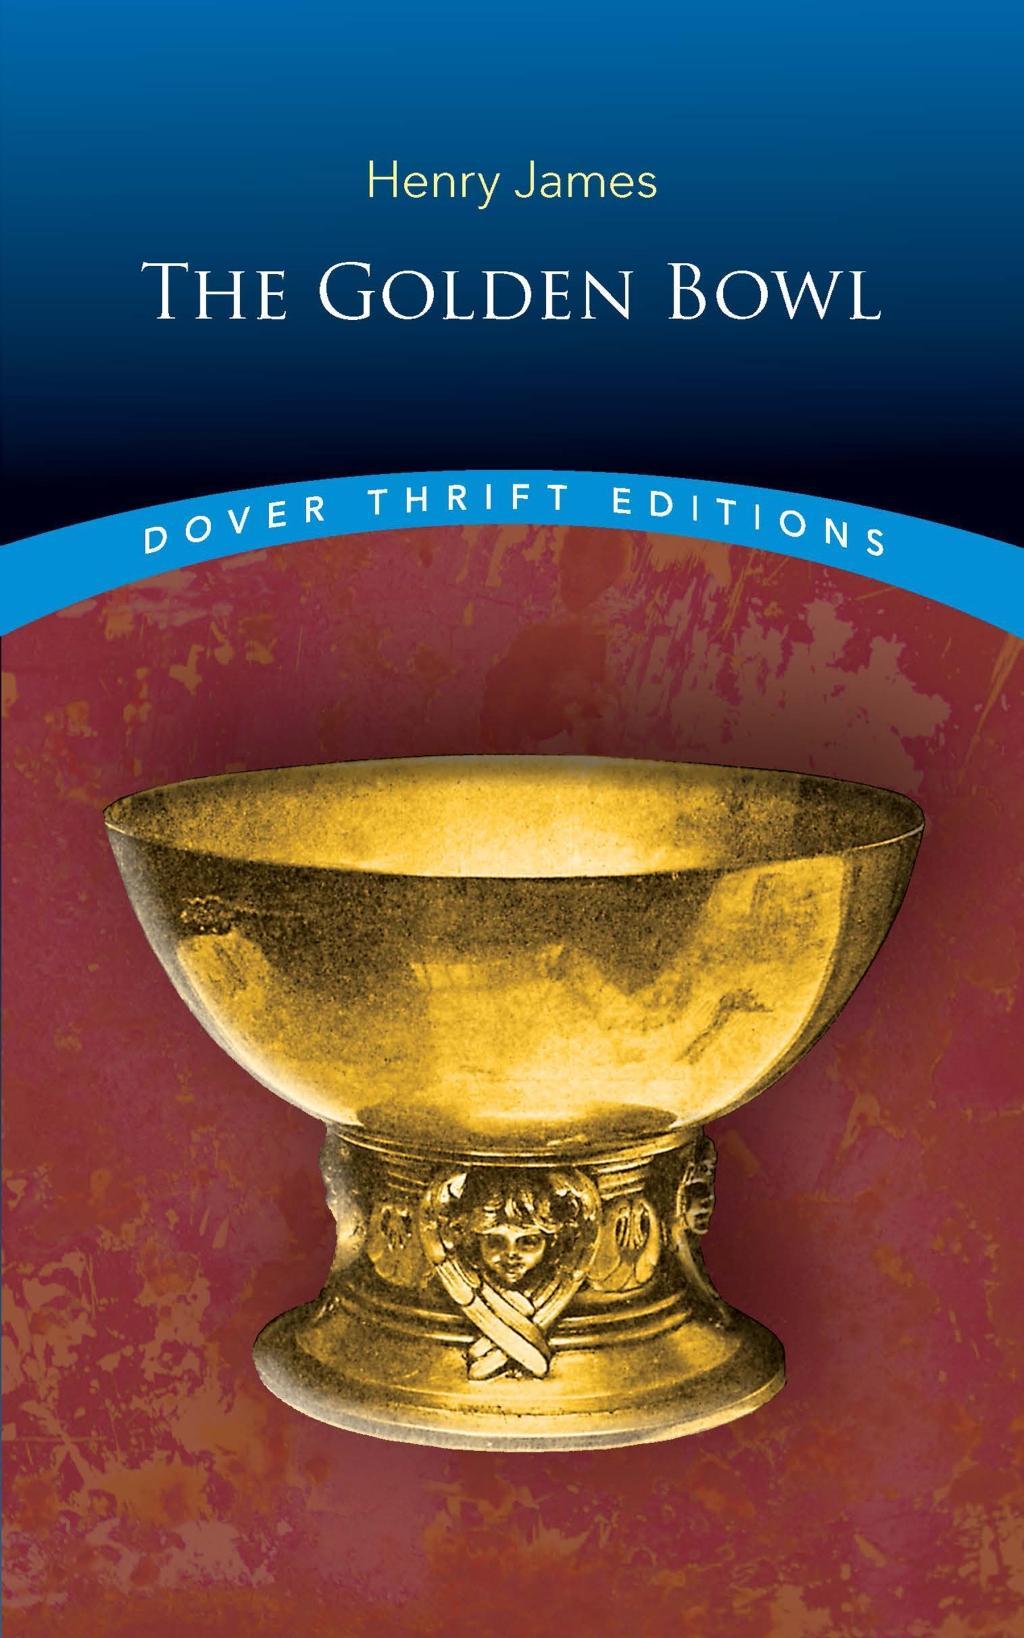 The Golden Bowl - James, Henry